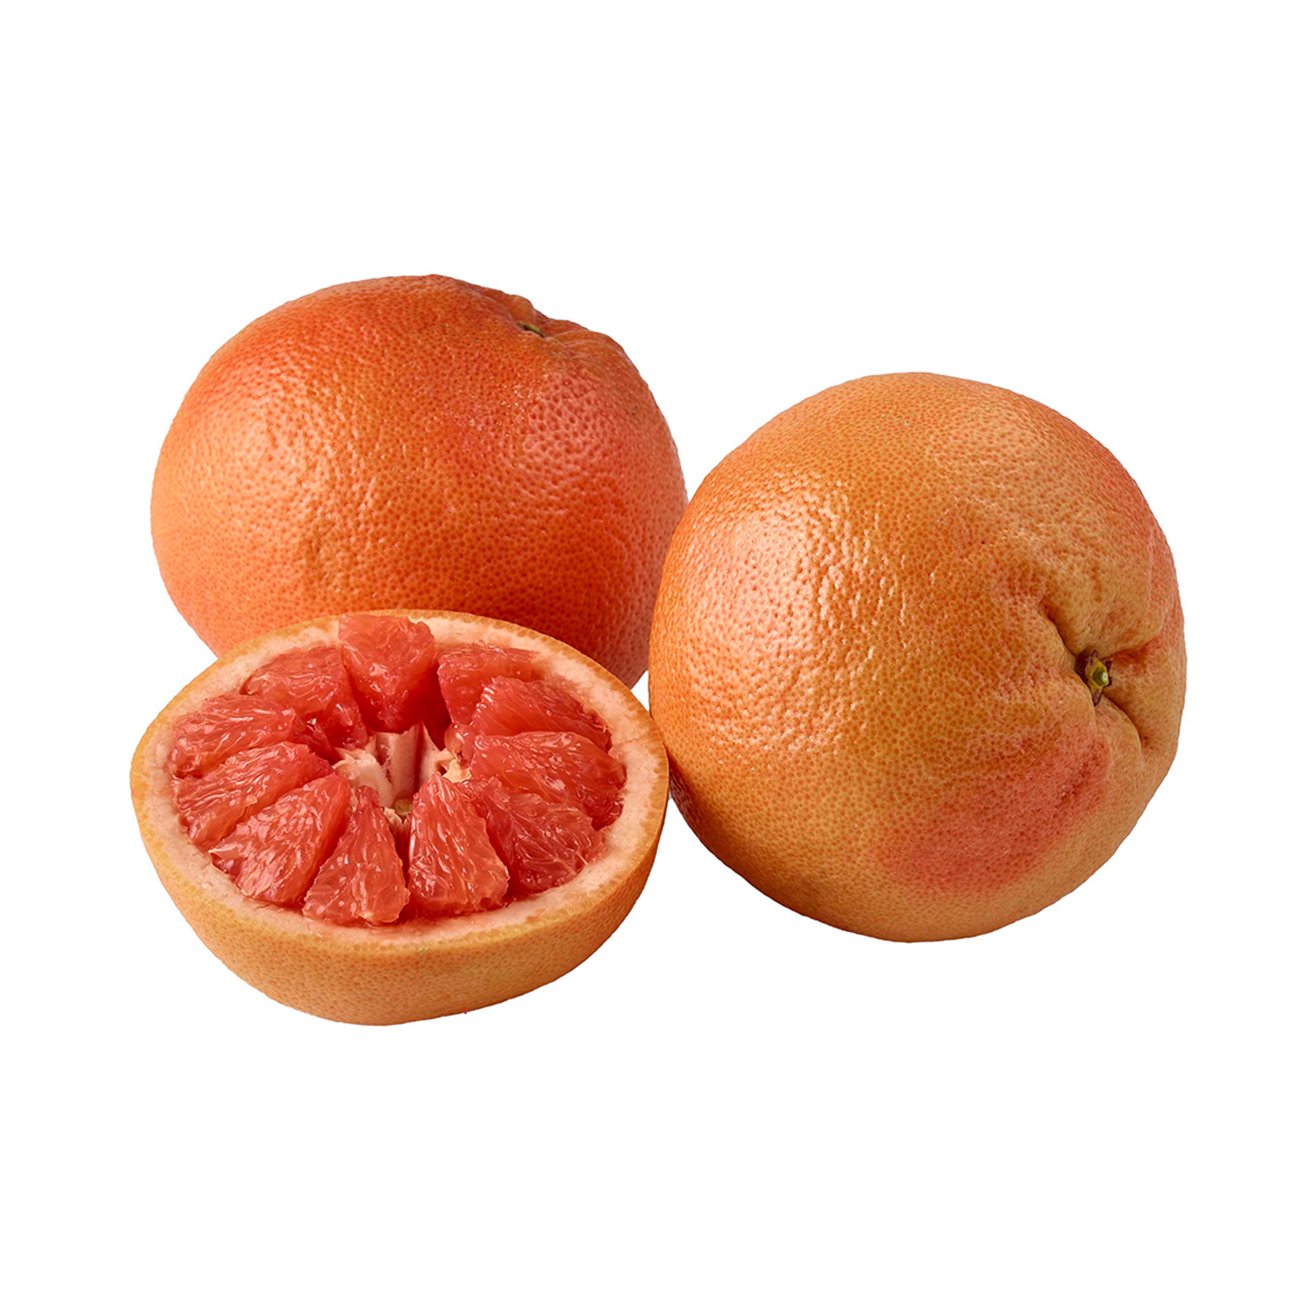 H-E-B Texas Roots - Citrus Large Shop Grapefruit at Fresh H-E-B